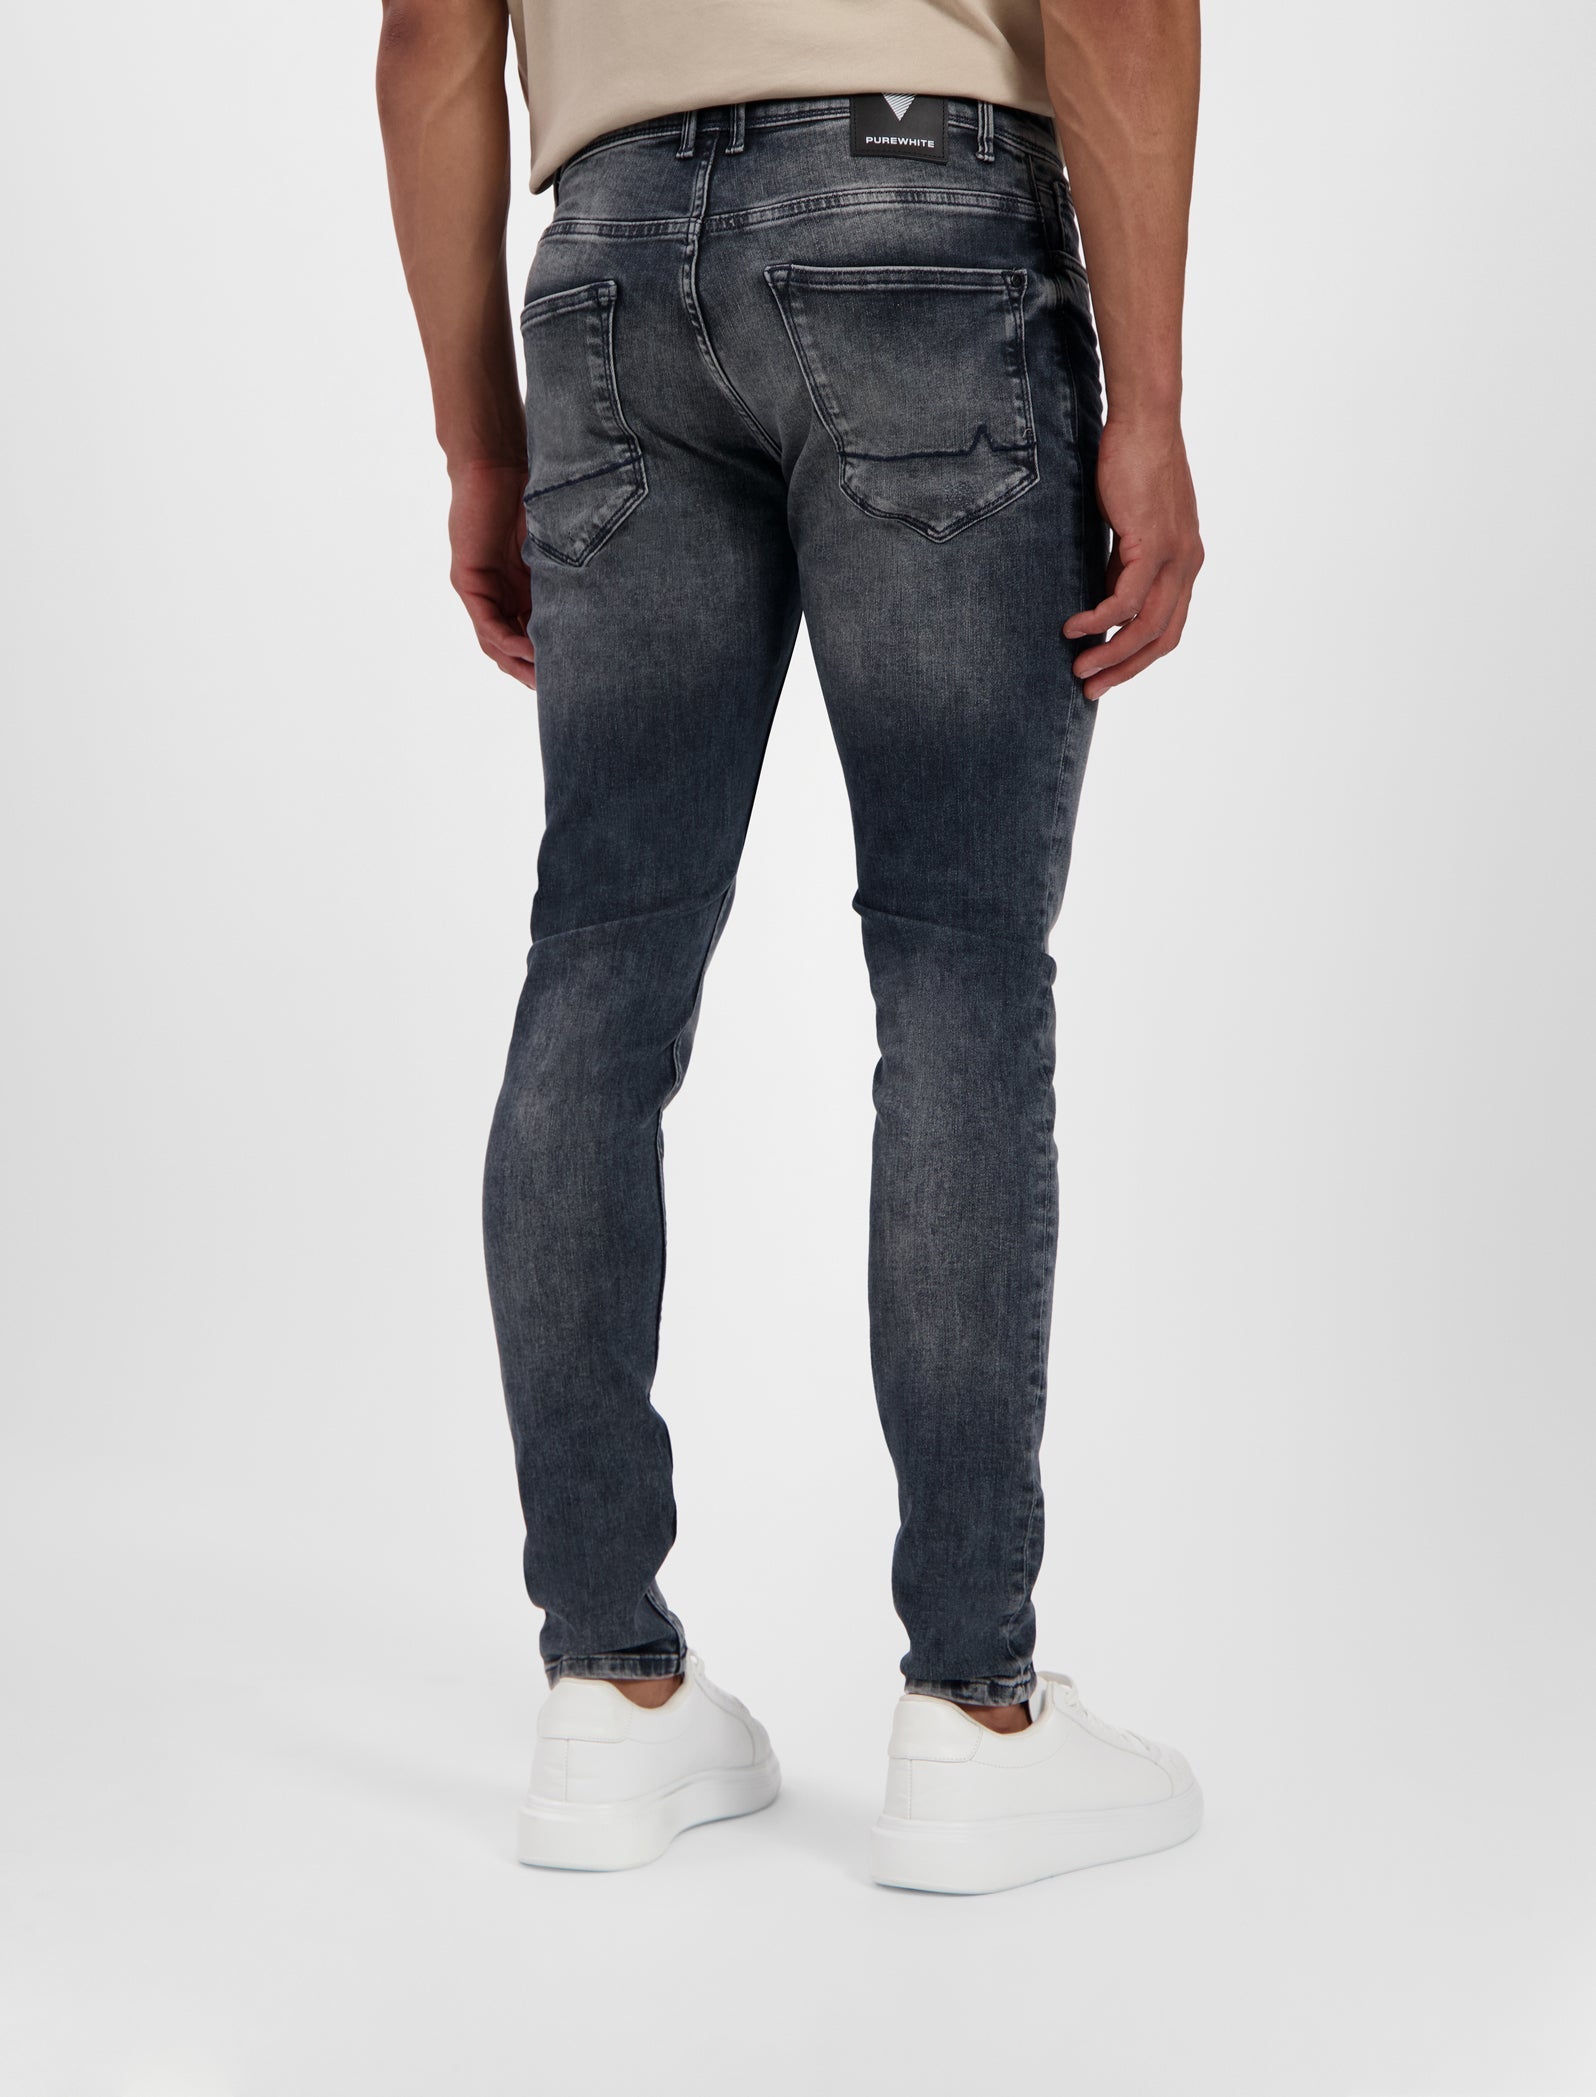 Purewhite Jeans The Jone W1160